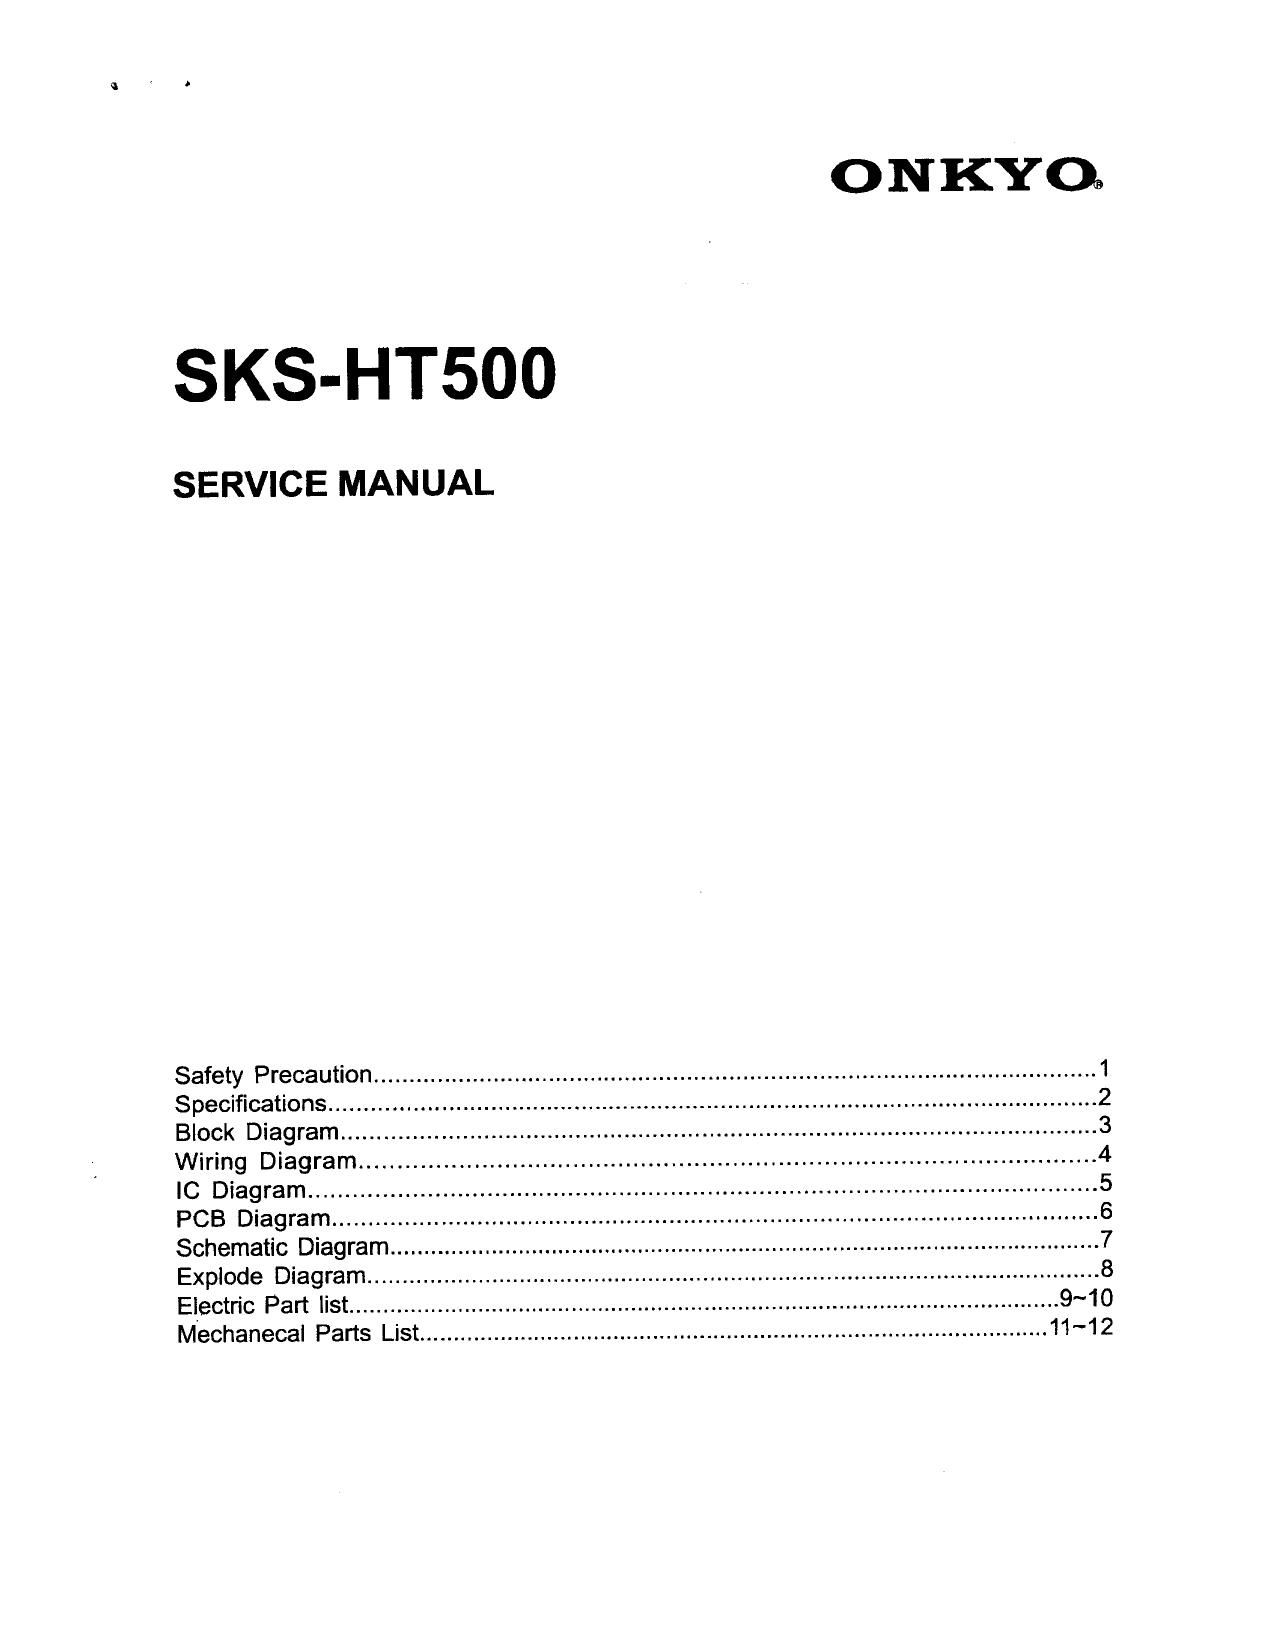 Onkyo SKSHT 500 Service Manual